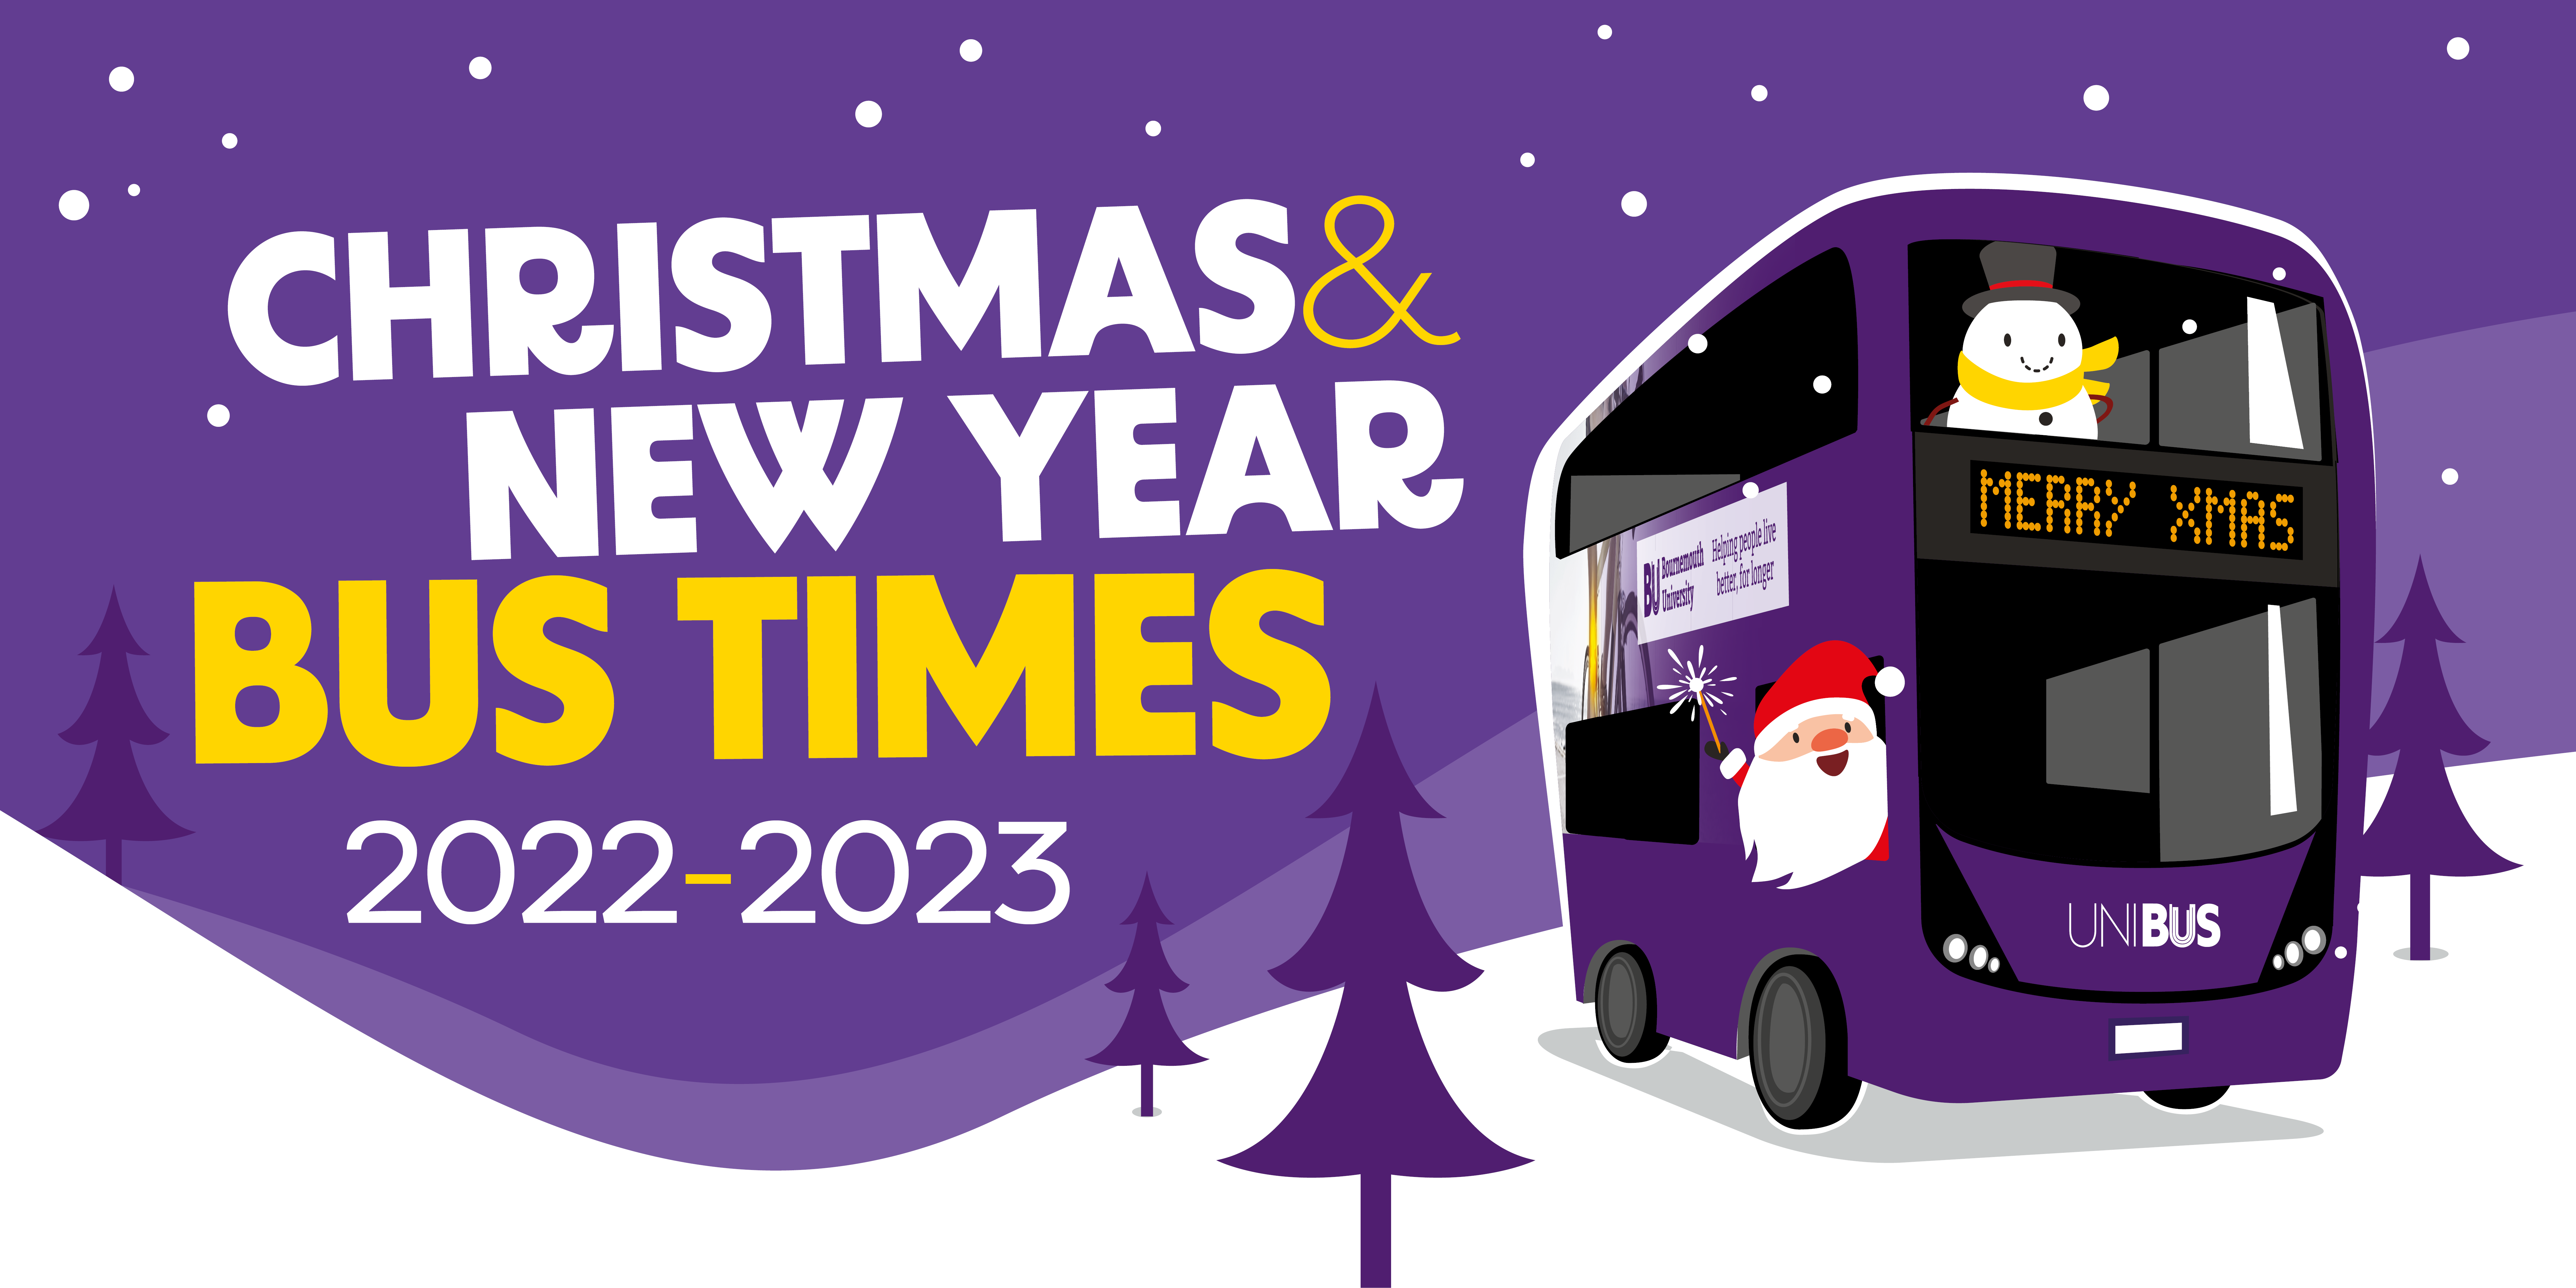 Unibus Christmas & New Year bus times 2022/23